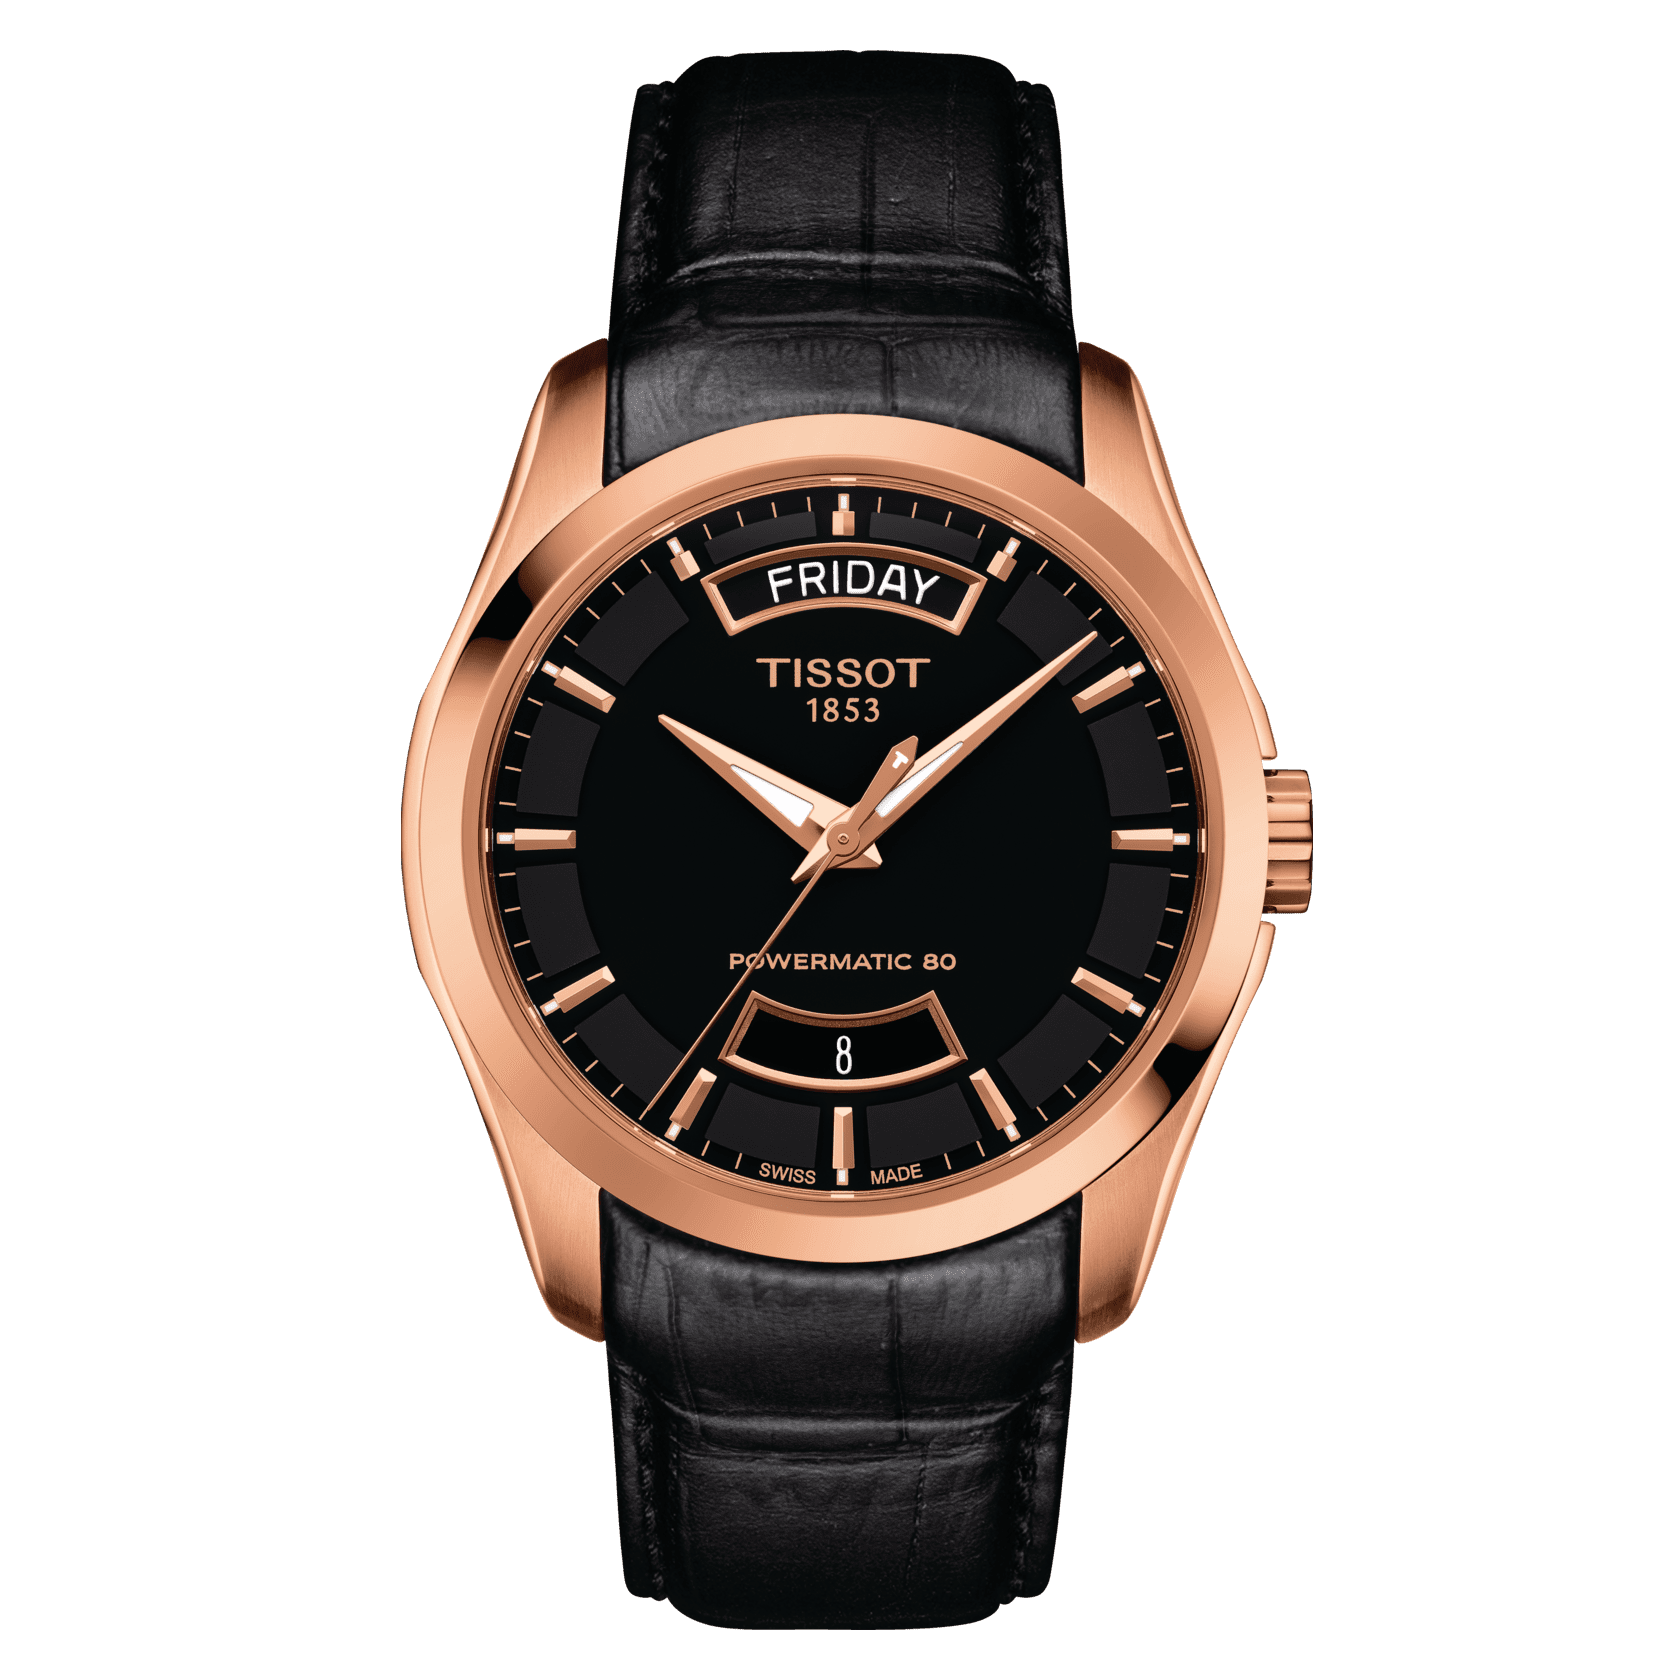 Replica Watches Montblanc